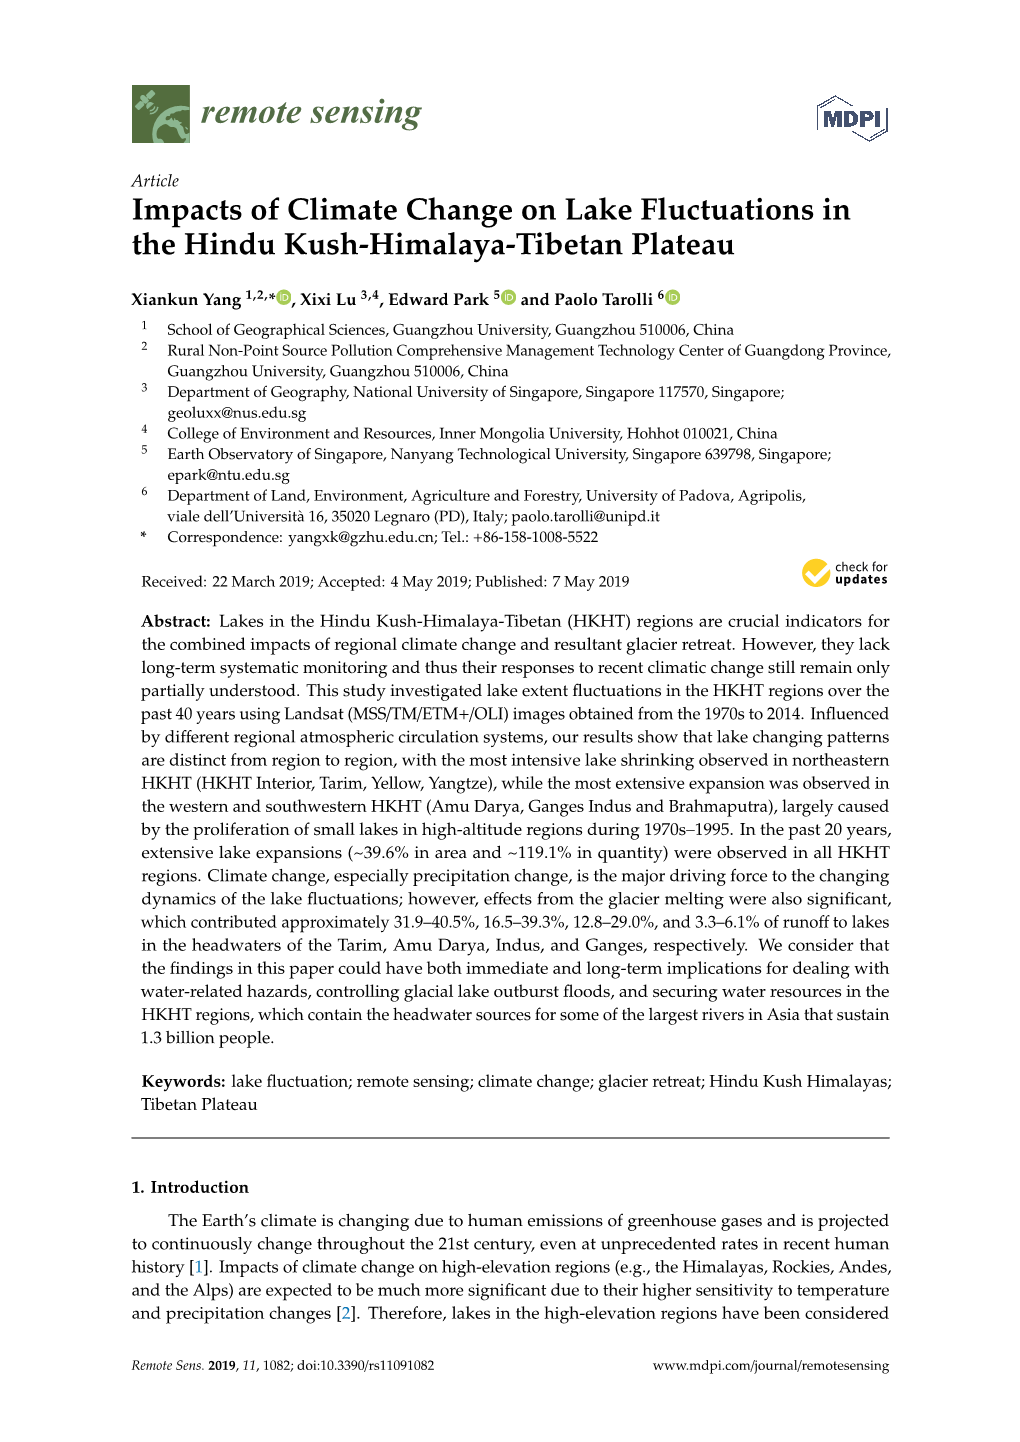 Impacts of Climate Change on Lake Fluctuations in the Hindu Kush-Himalaya-Tibetan Plateau